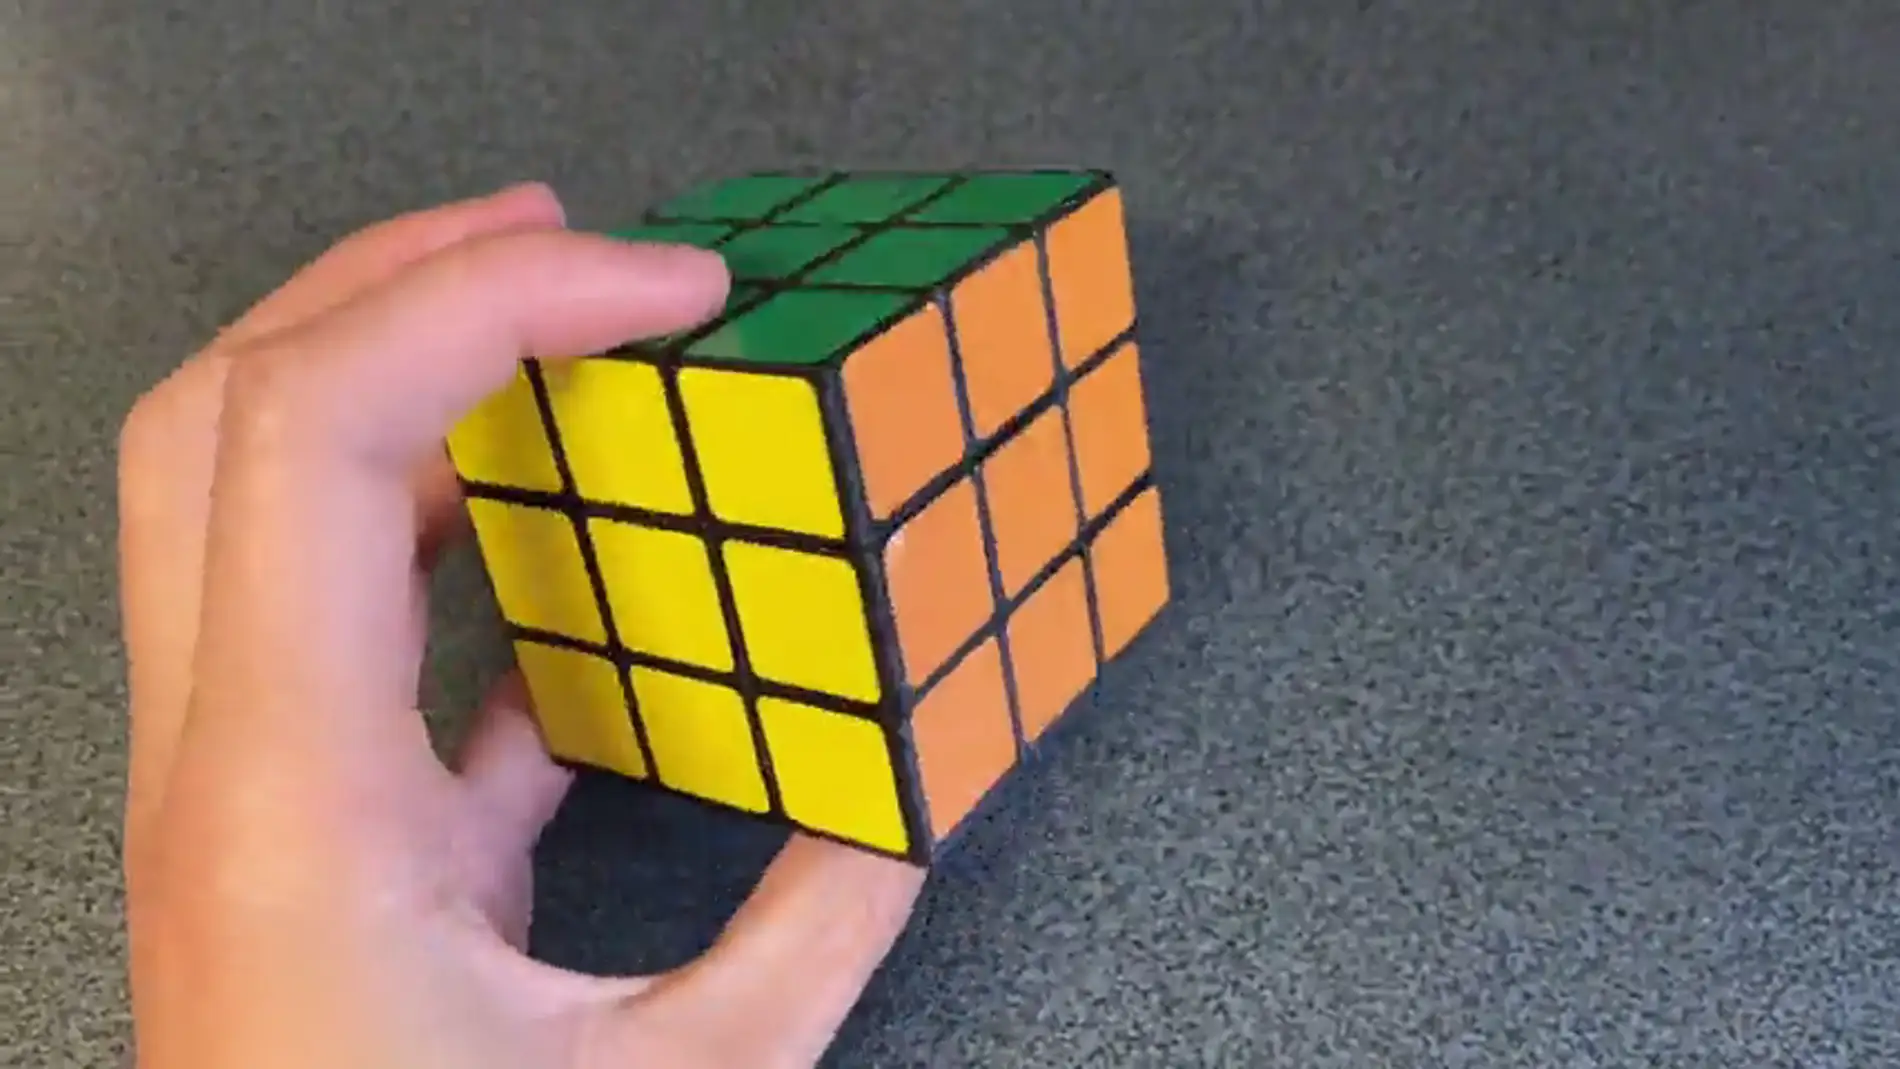 Así funciona la dieta del método del cubo de Rubik